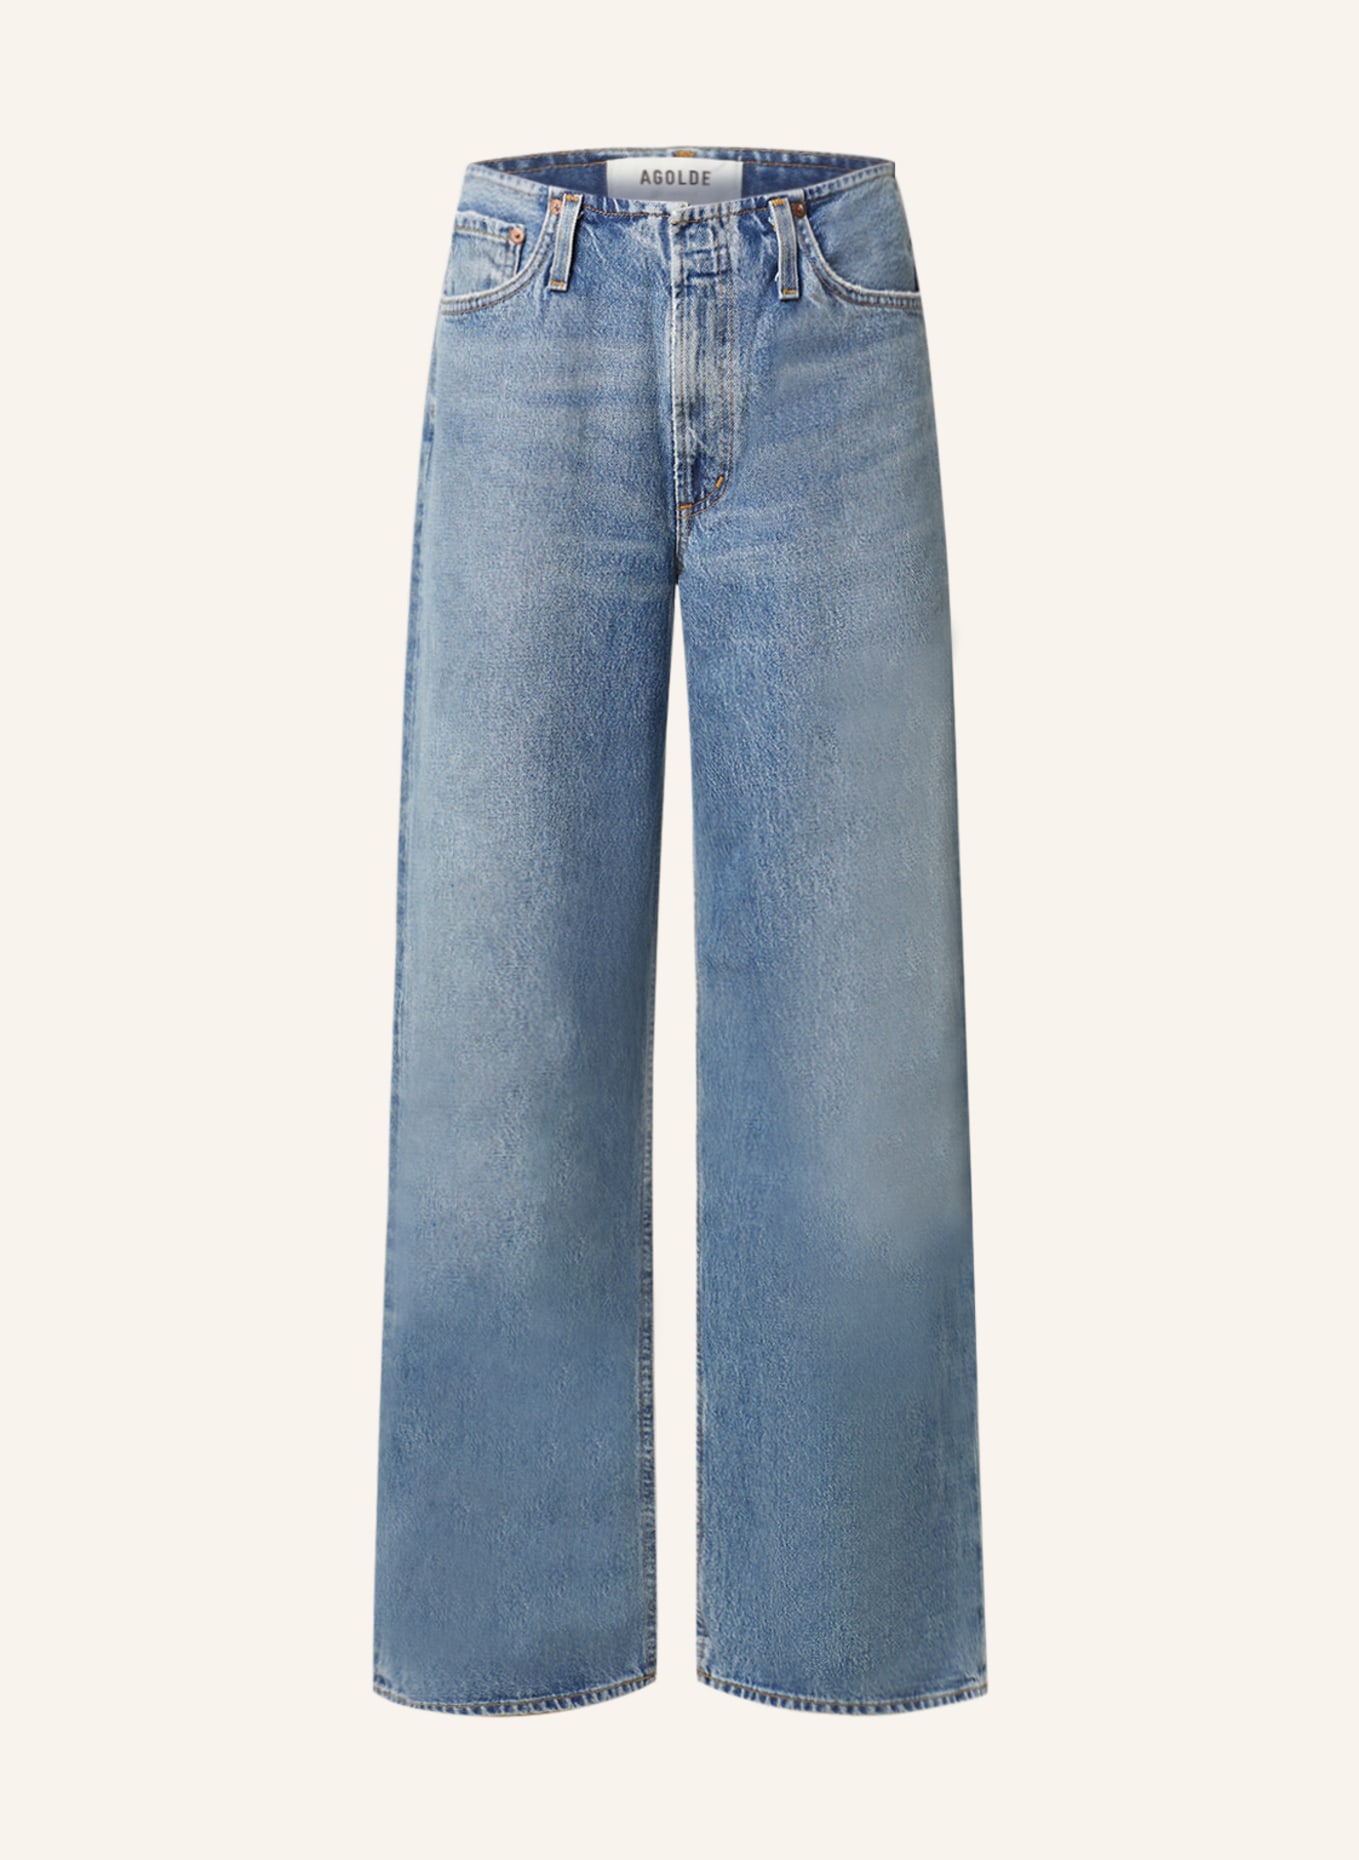 AGOLDE Jeans LEX JEAN, Farbe: swing vintage washed ind (Bild 1)